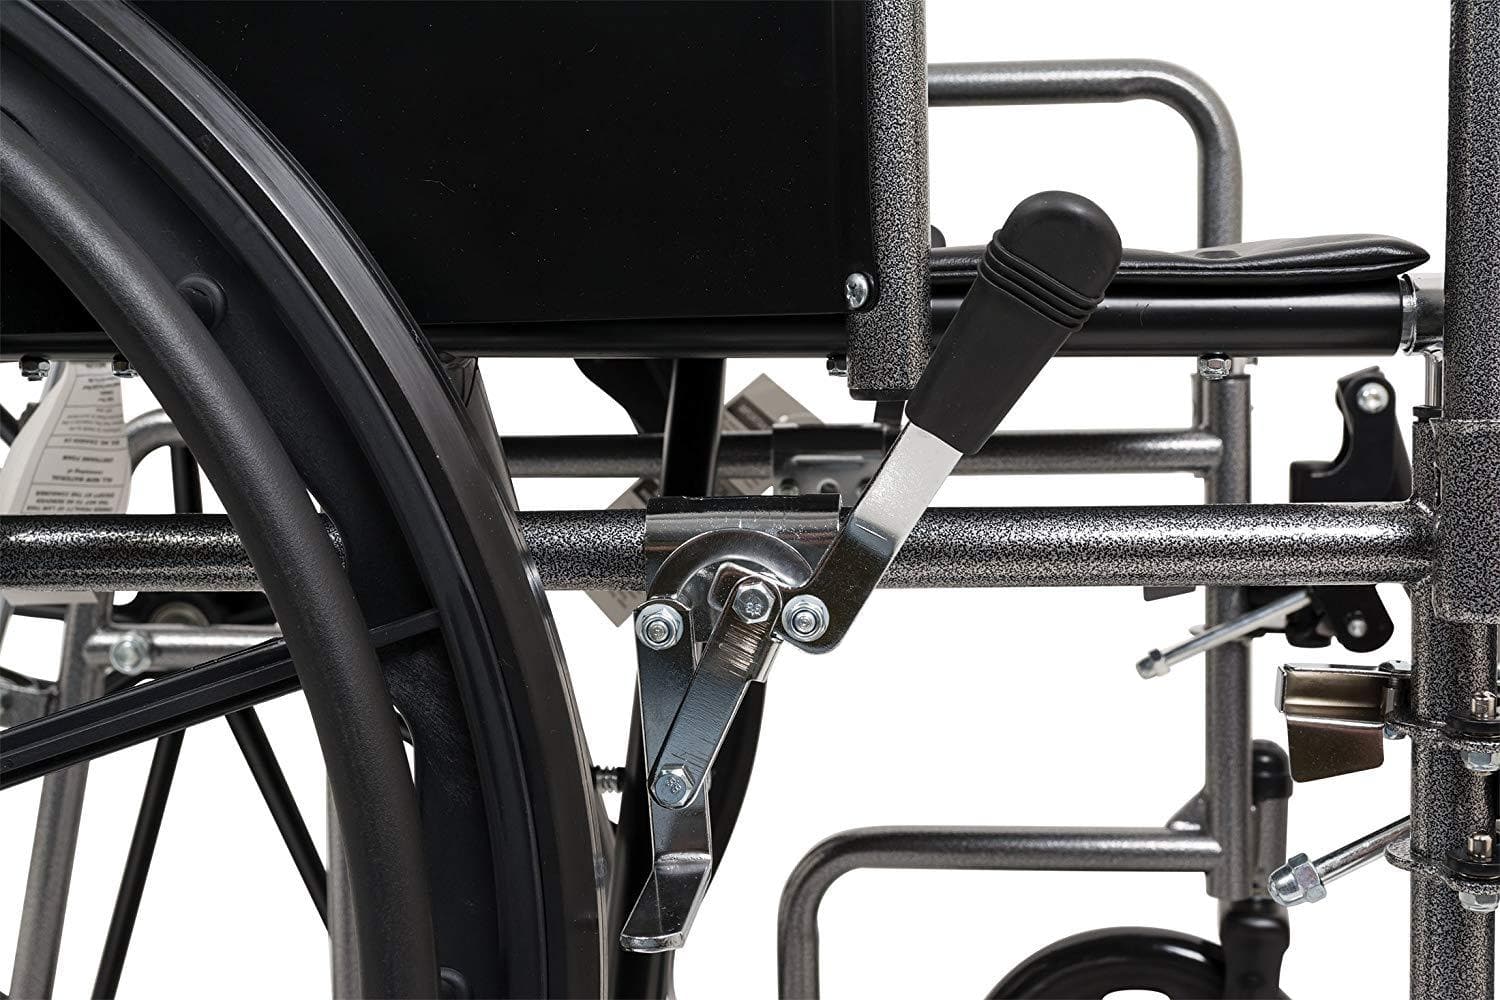 ProBasics Standard Reclining Wheelchair - Padded Detachable Desk Length Arms - Senior.com Wheelchairs